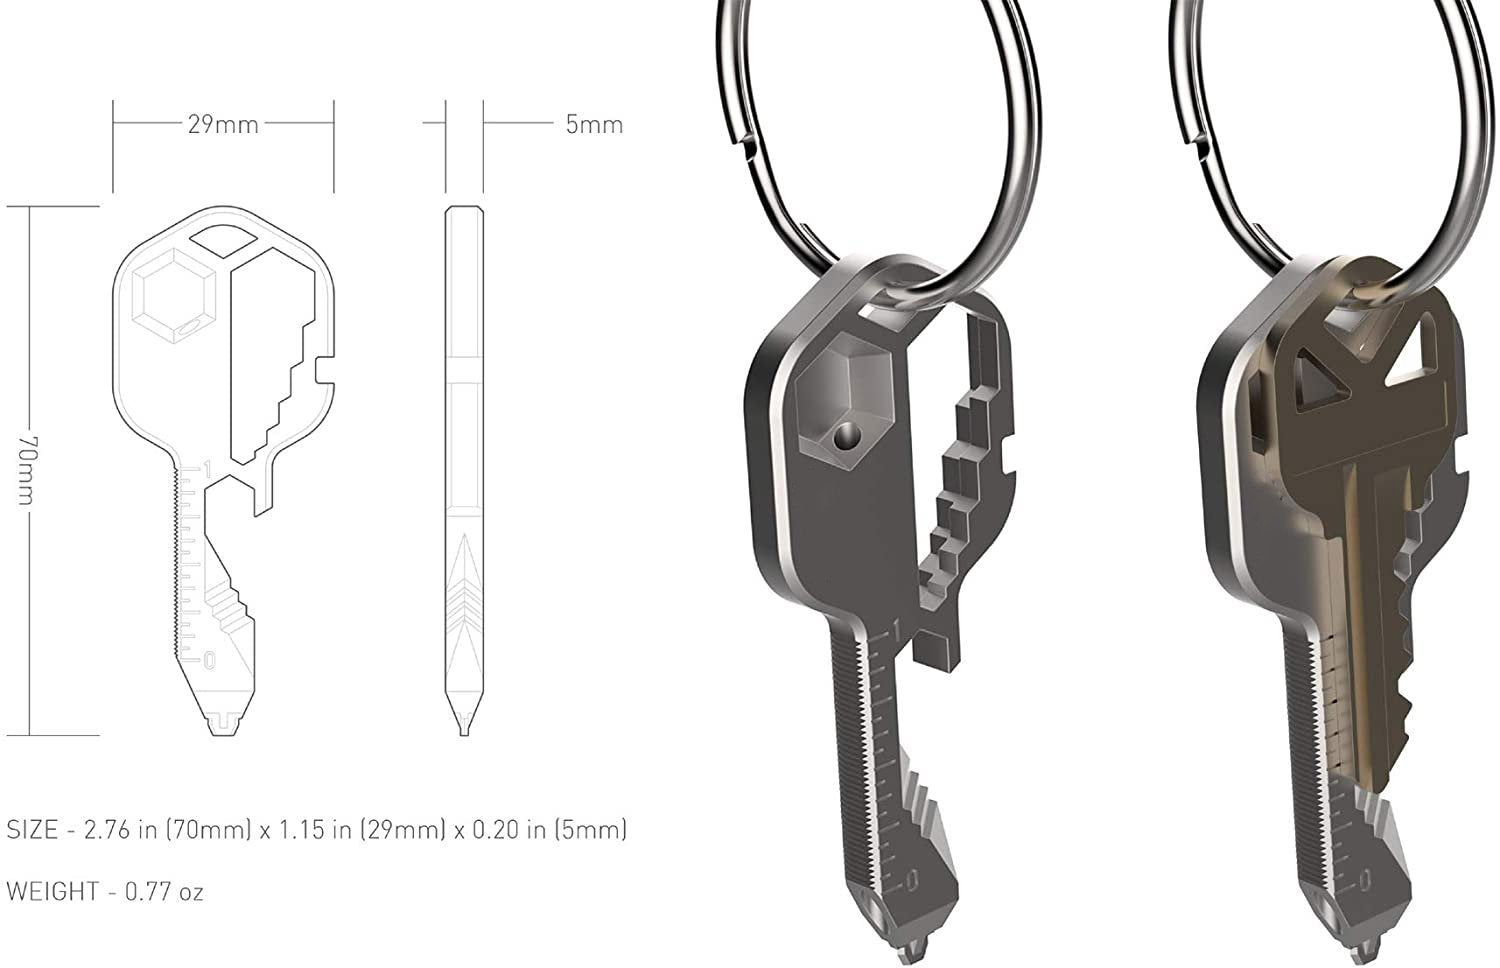 24 in 1 Key shaped pocket tool